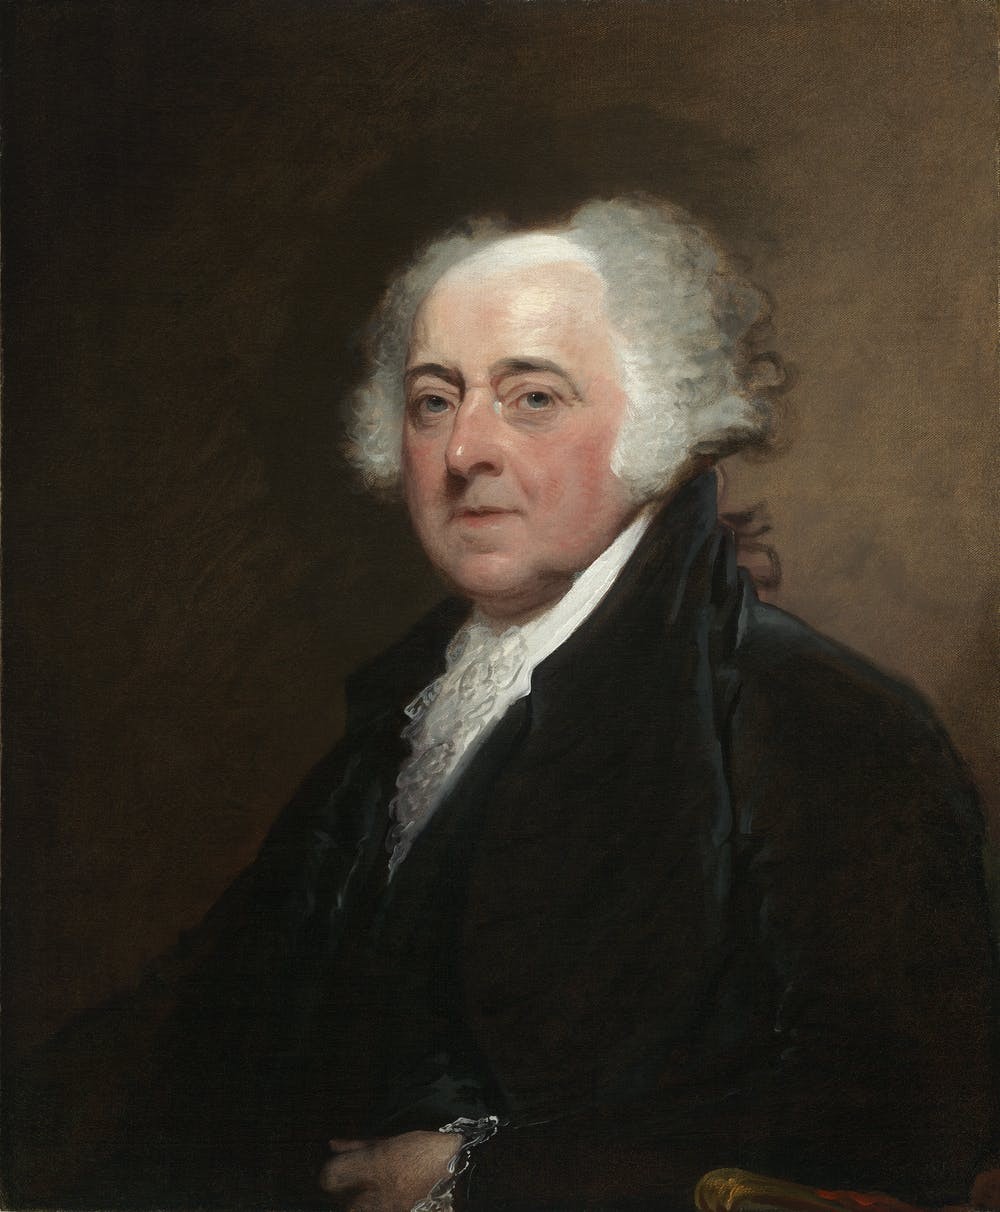 John Adams, primeira vice-presidente dos EUA, considerava o cargo o 'mais insignificante' (Foto: Gilbert Stuart, National Gallery of Art/Wikimedia Commons)